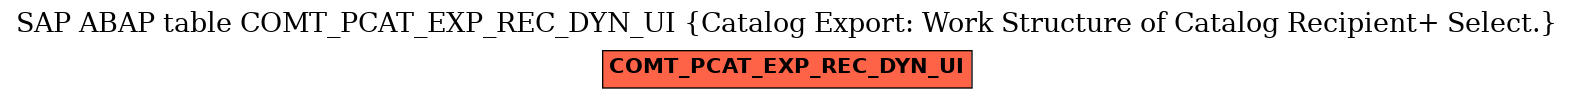 E-R Diagram for table COMT_PCAT_EXP_REC_DYN_UI (Catalog Export: Work Structure of Catalog Recipient+ Select.)